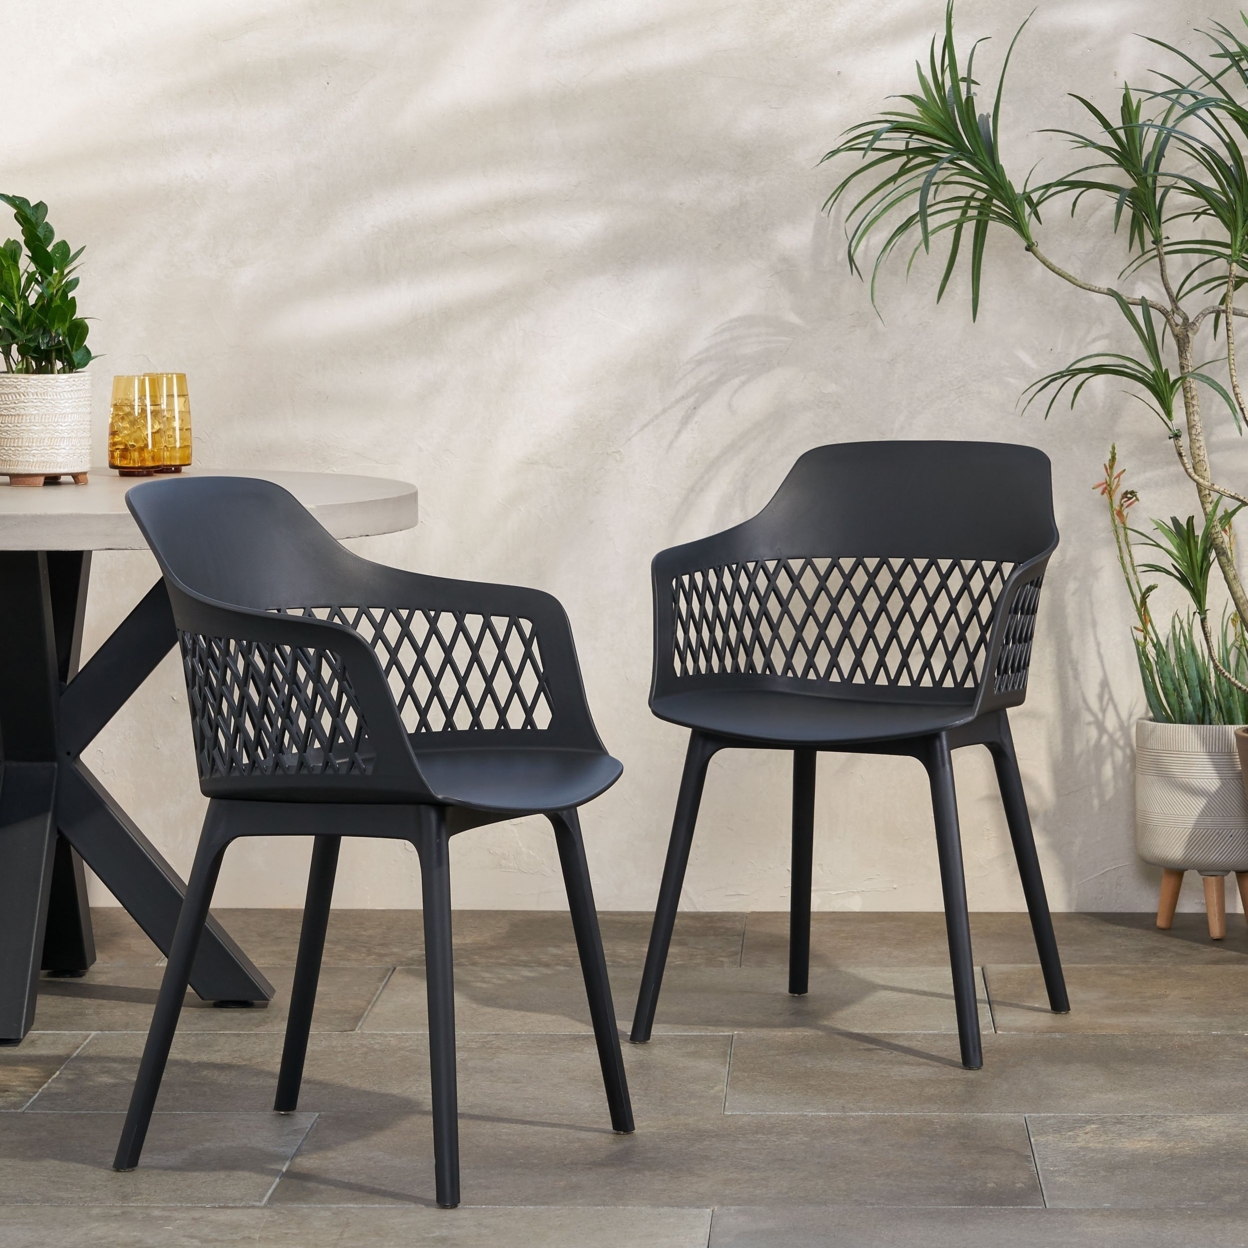 Airyanna Outdoor Modern Dining Chair (Set Of 2) - Mint